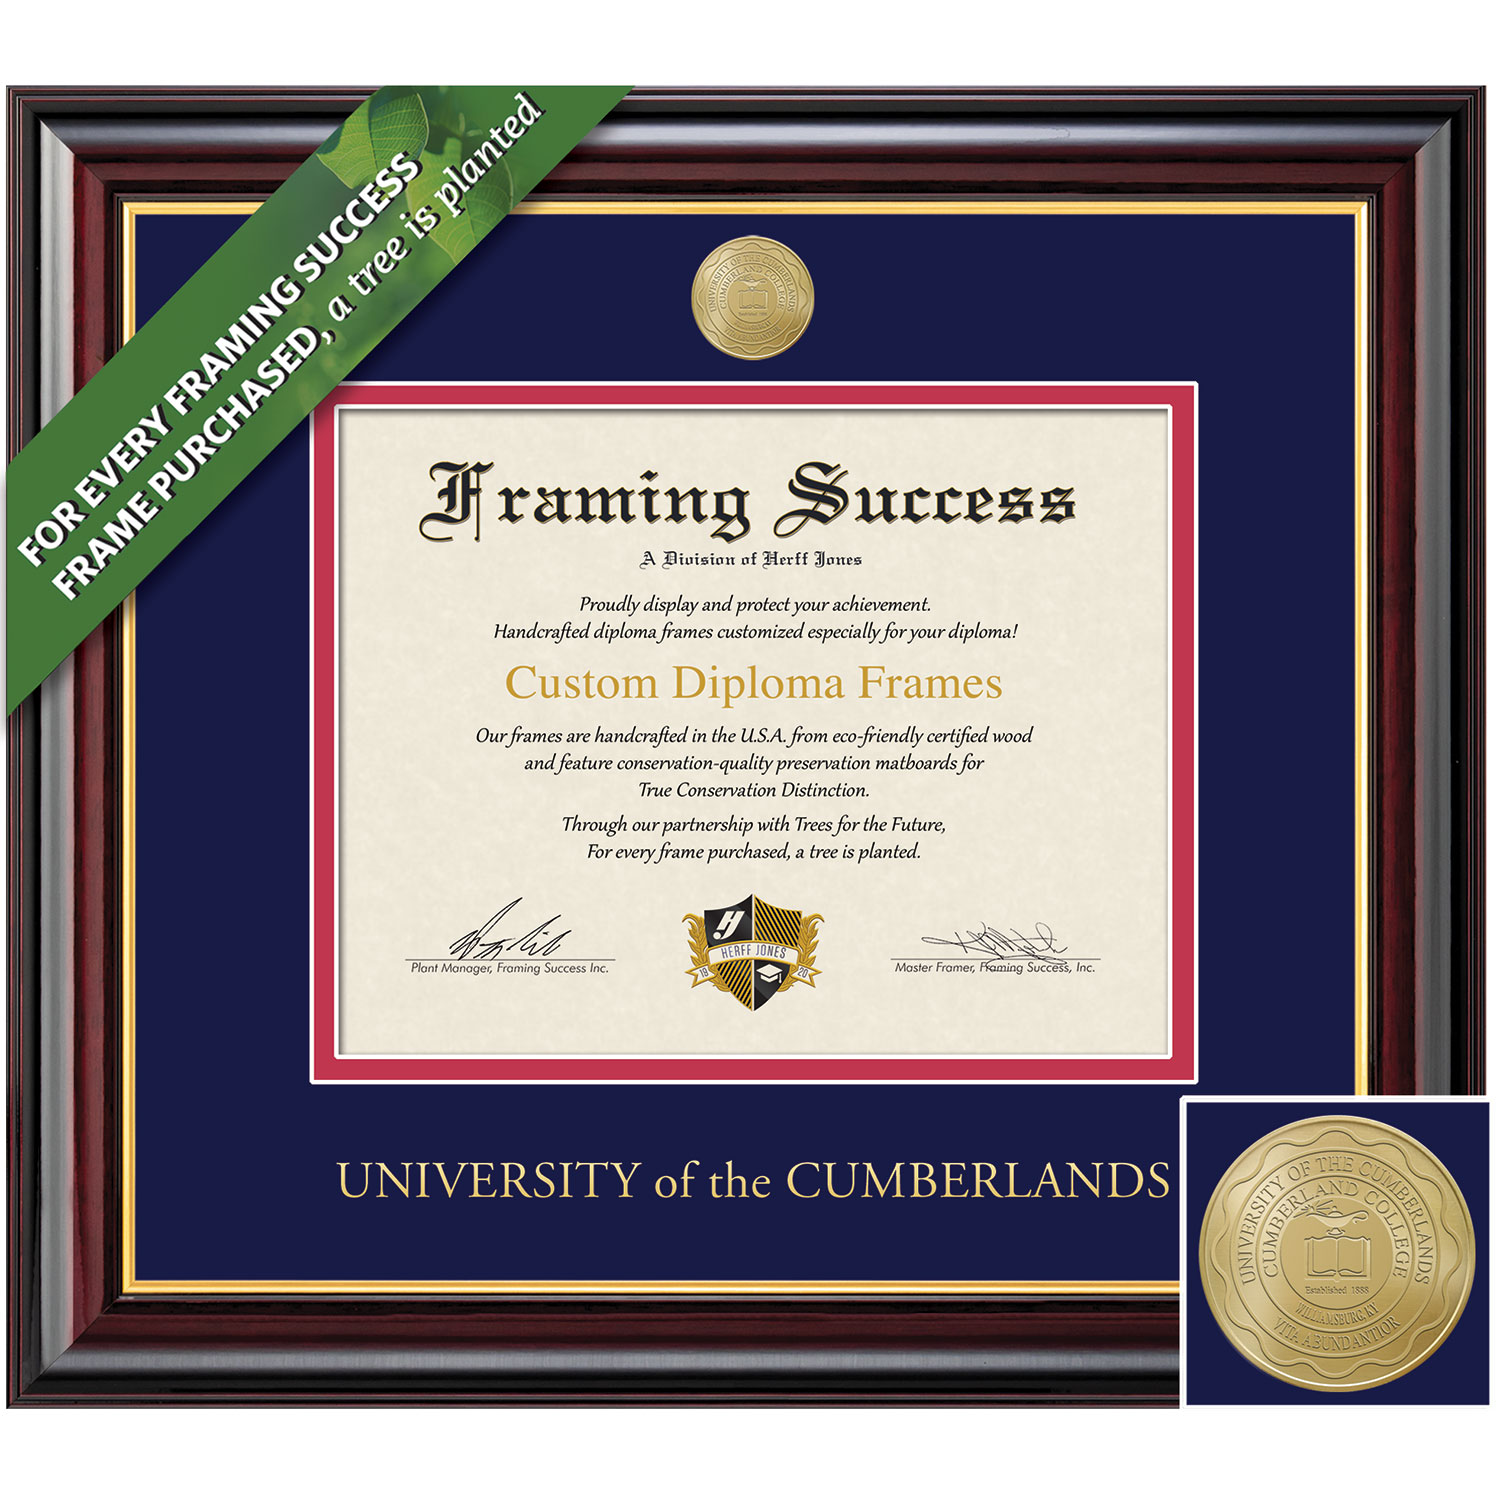 Framing Success 11 x 14 Windsor Gold Medallion PhD Diploma Frame